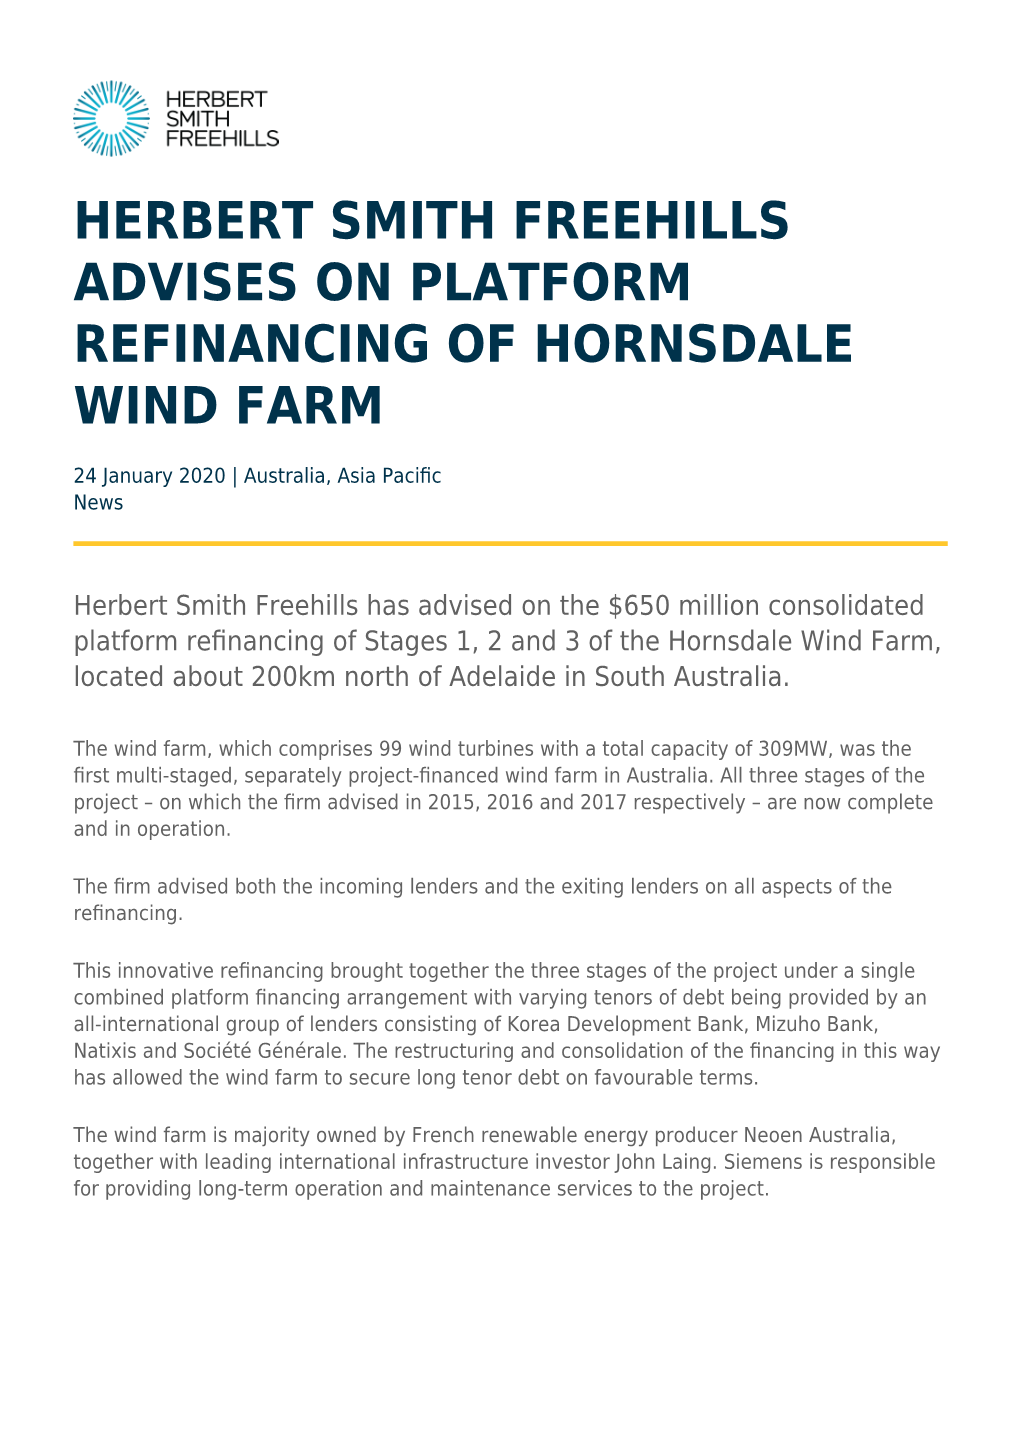 Herbert Smith Freehills Advises on Platform Refinancing of Hornsdale Wind Farm